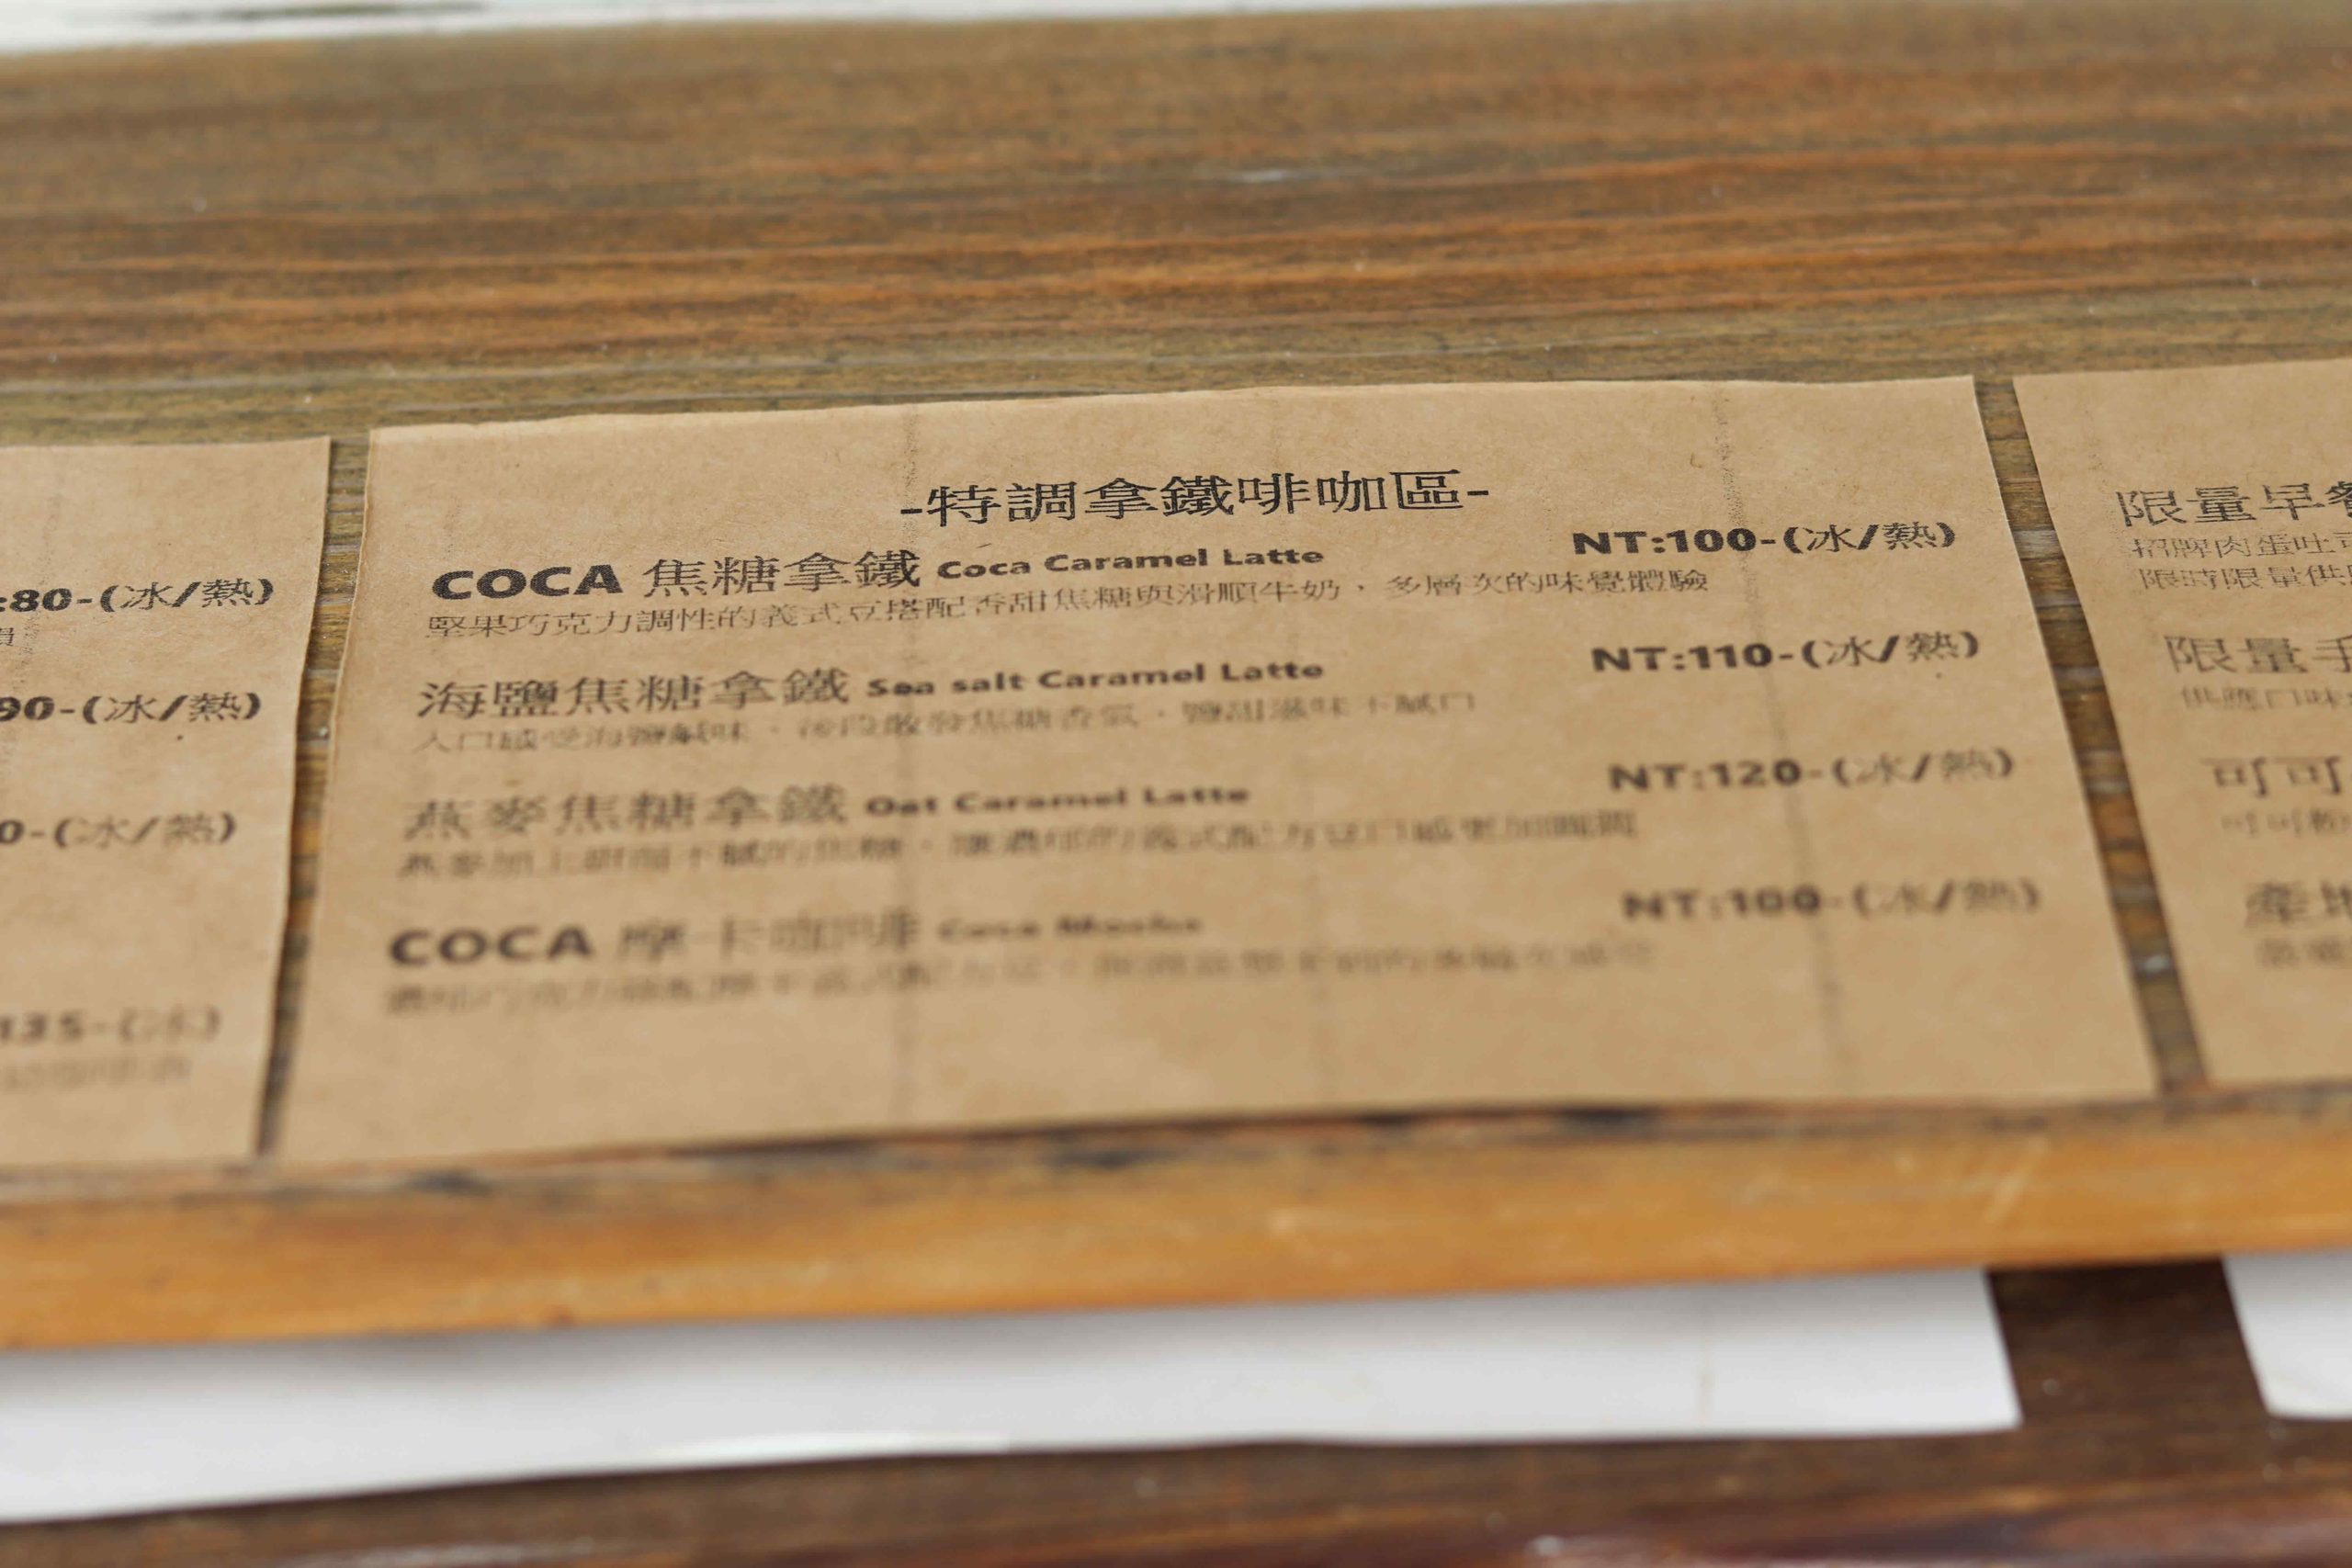 COCA COFFEE 渴口手沖咖啡menu